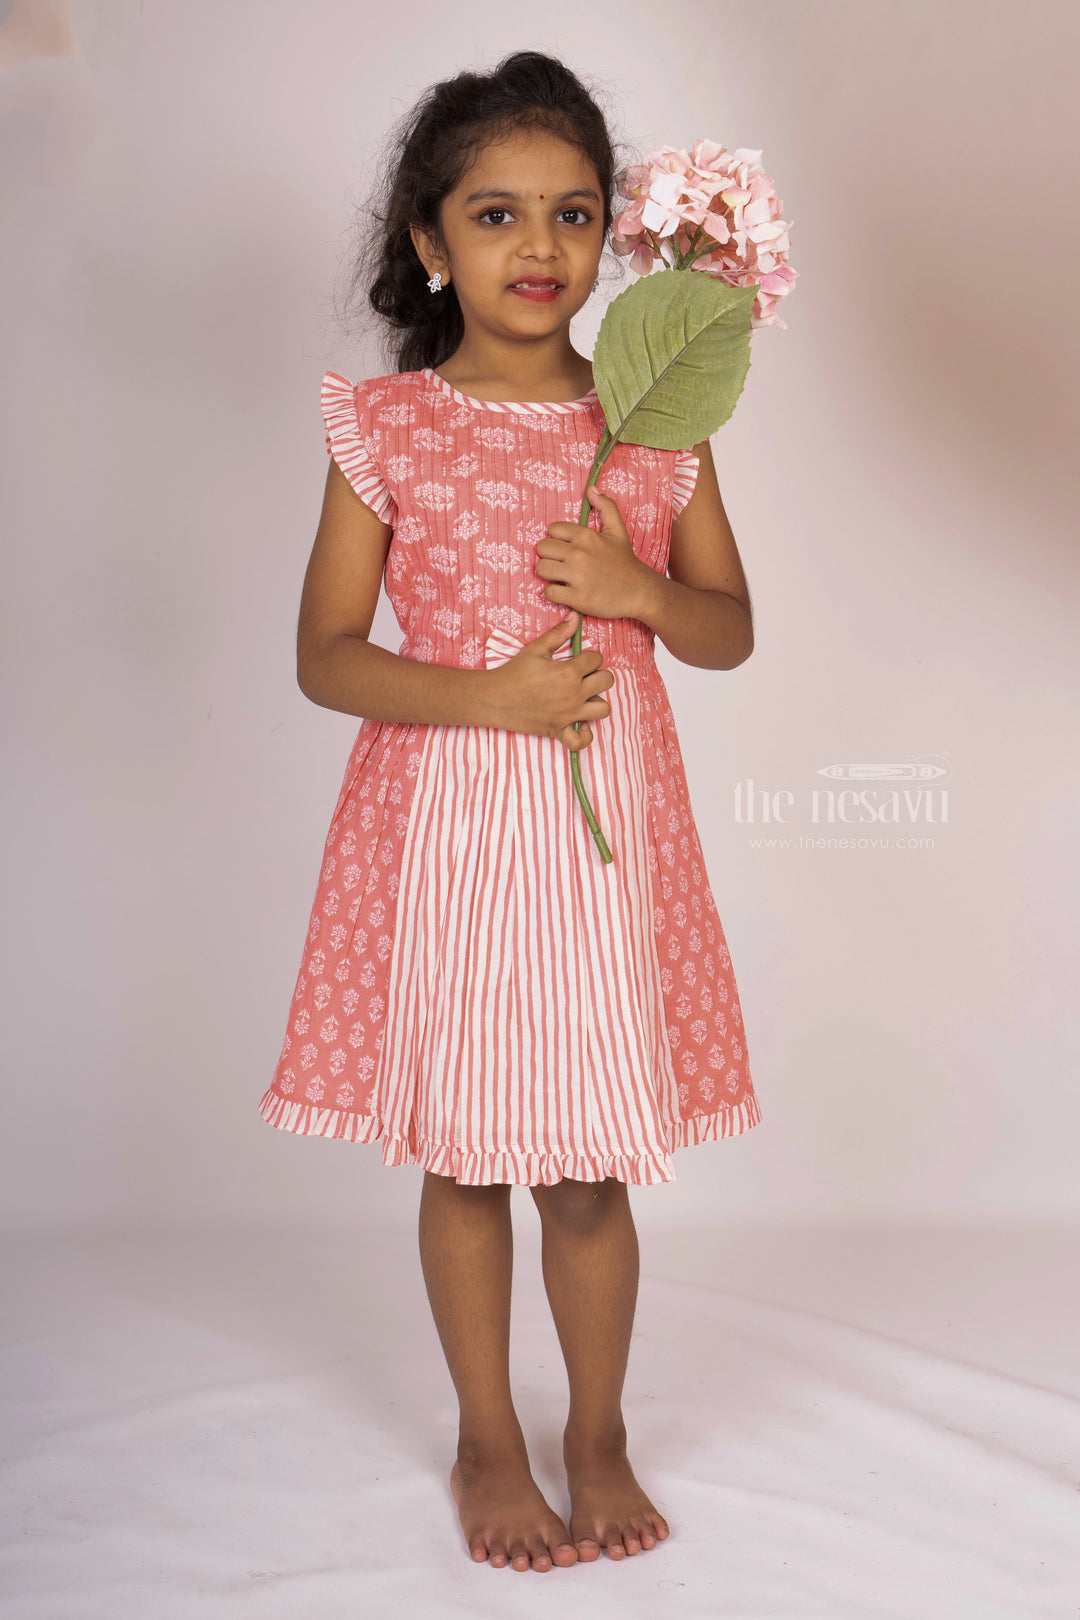 The Nesavu Frocks & Dresses Latest Pin-Tucked Designer Cotton Frock With Bow Trims For Girls psr silks Nesavu 14 (6M) / pink GFC850